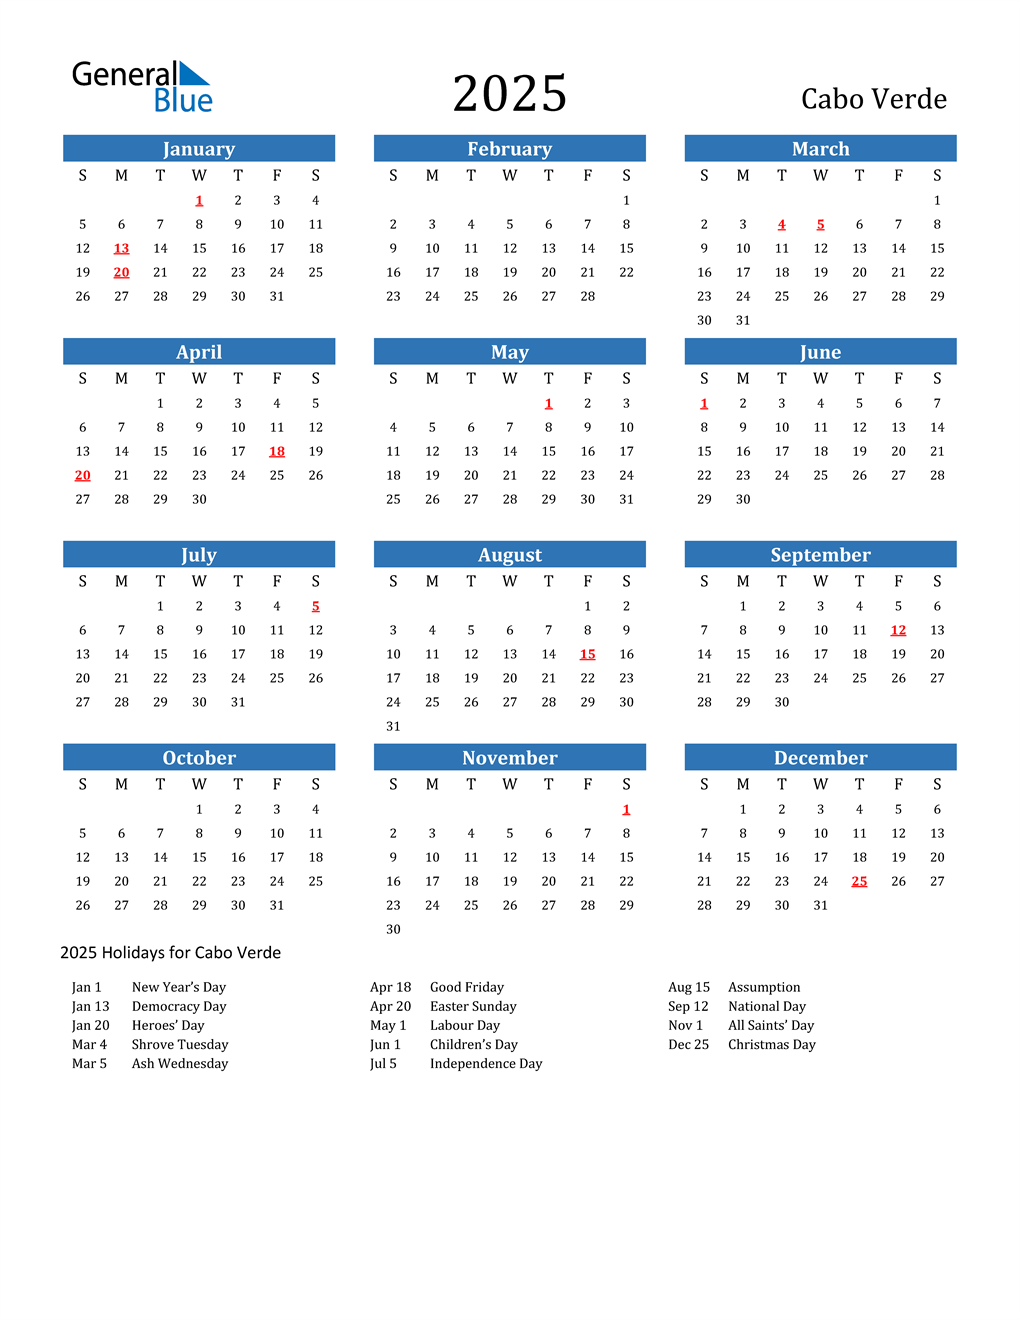 2025-cabo-verde-calendar-with-holidays